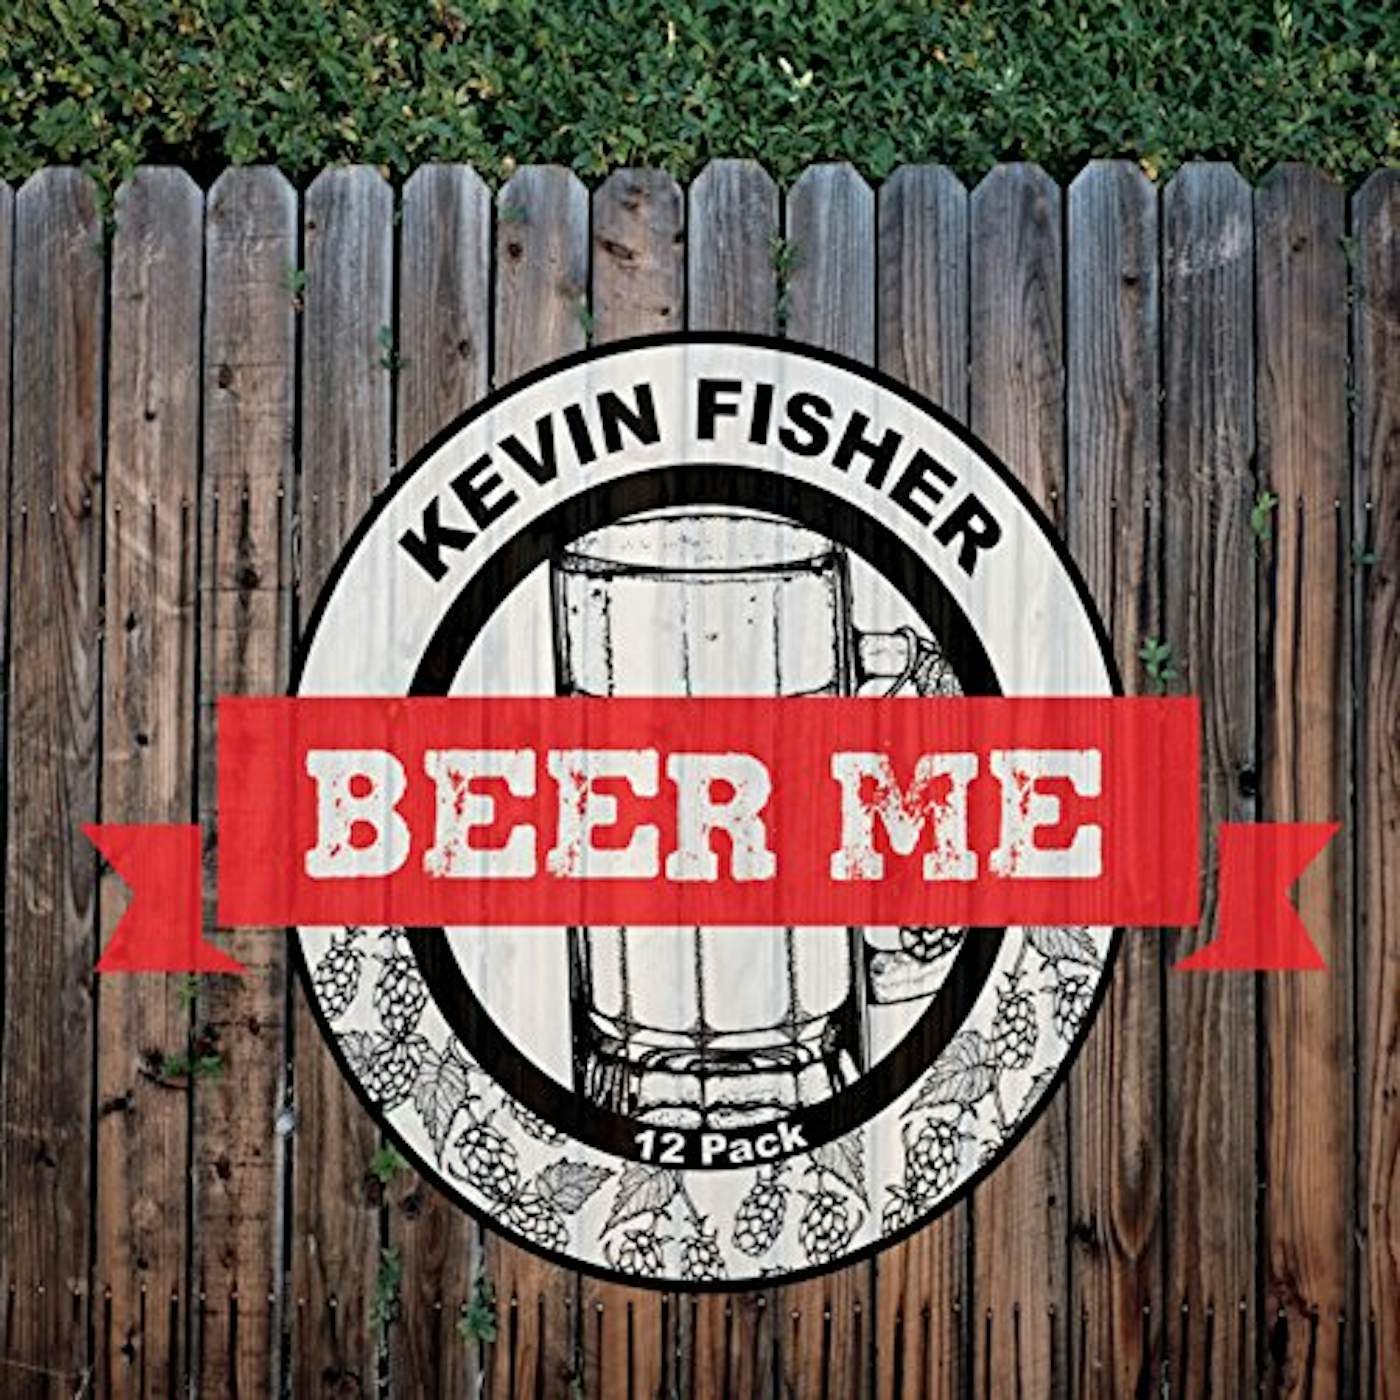 Kevin Fisher BEER ME CD